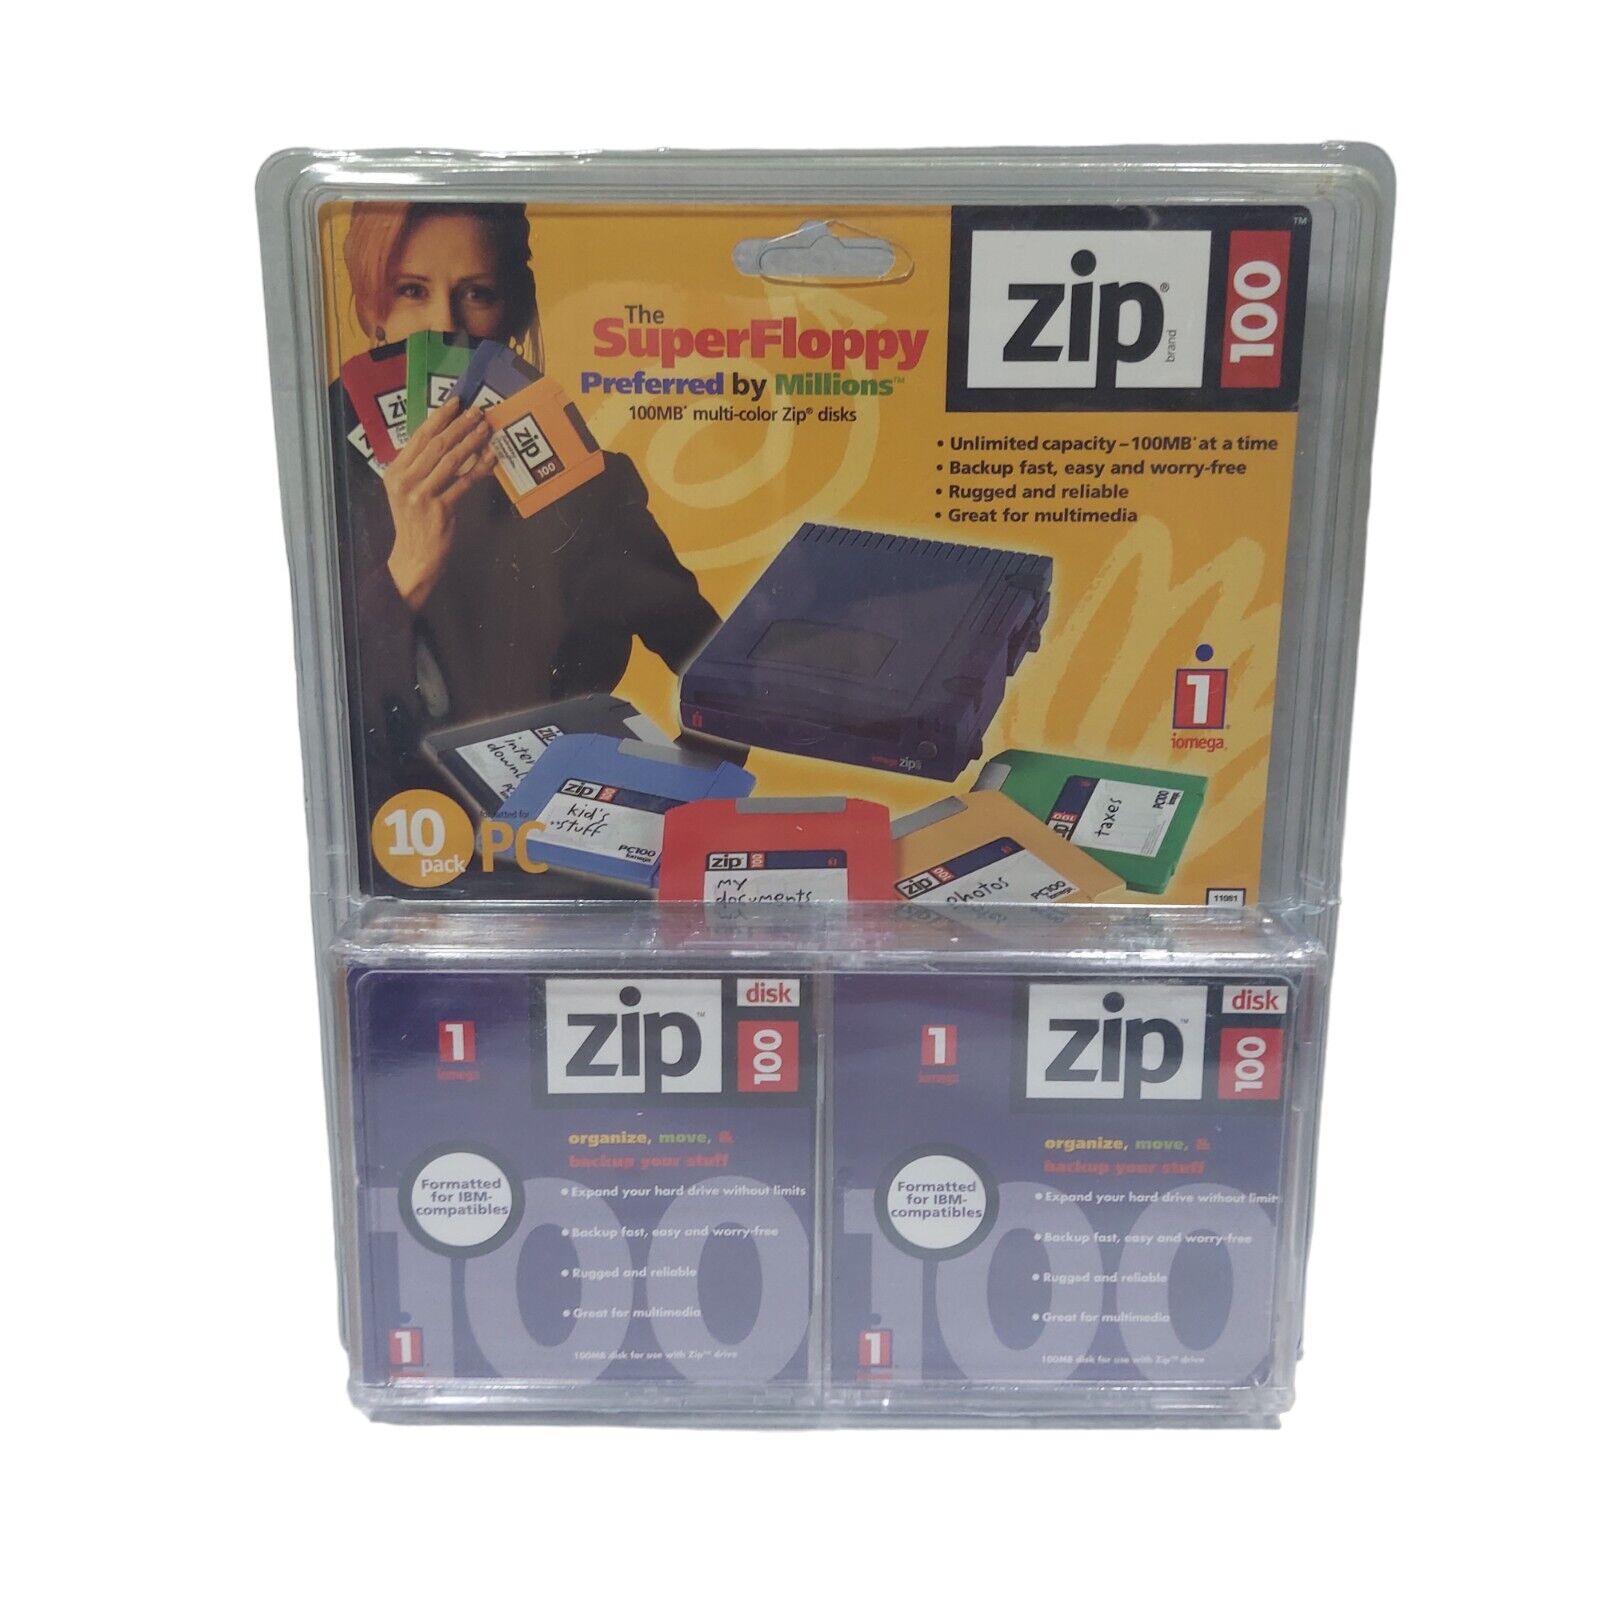 New Iomega Floppy Disks The Super Floppy 100MB Multicolored Zip Disks 10 Pack